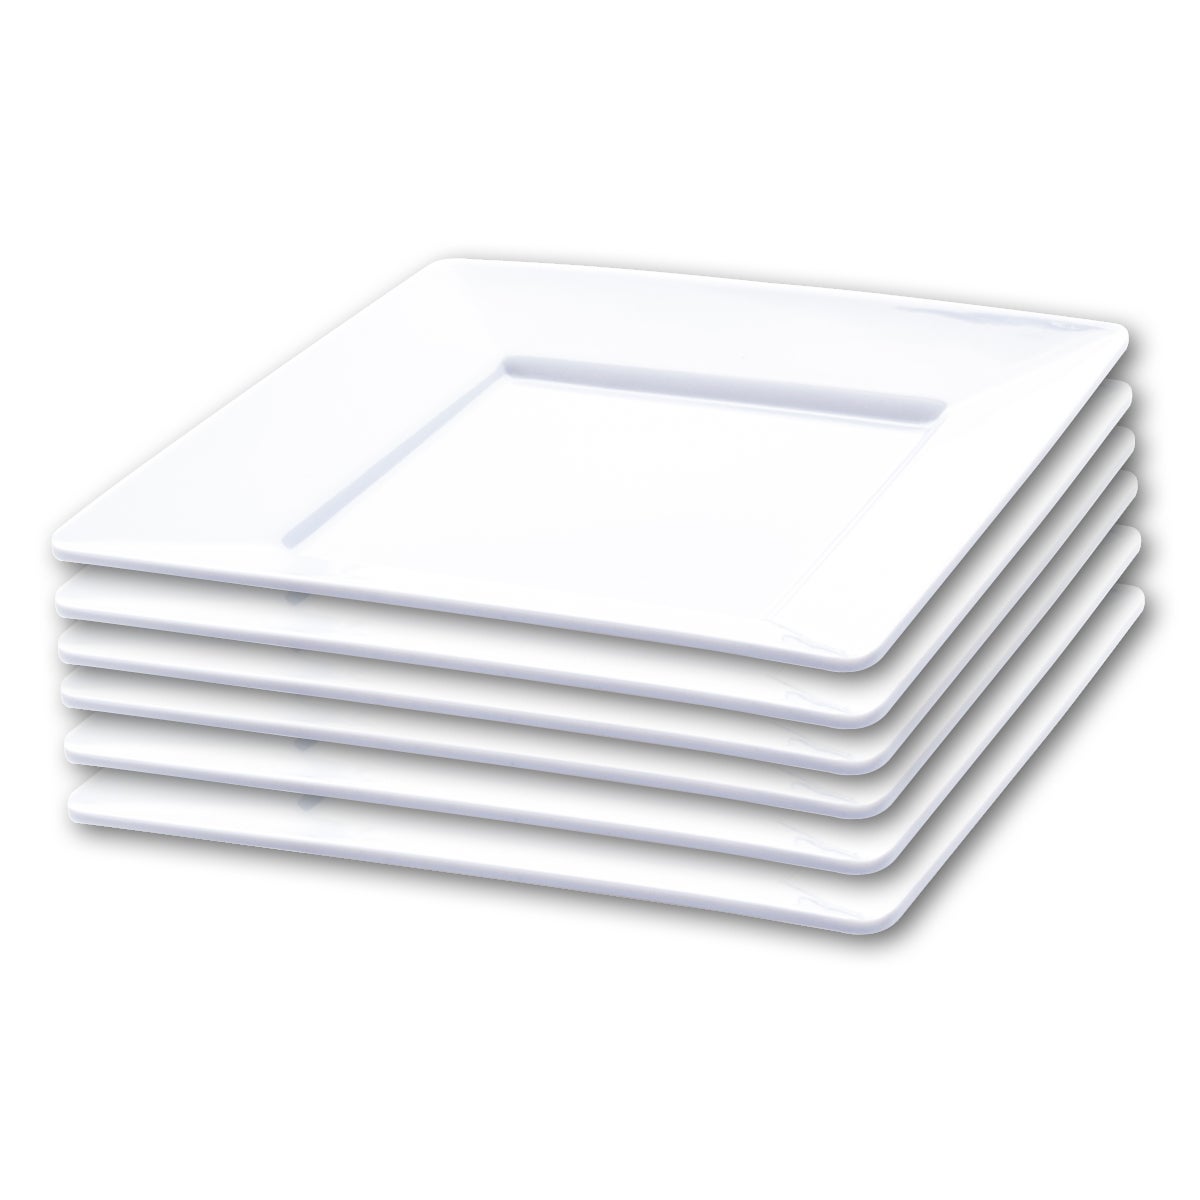 Home Master 6PCE Melamine Plates Square Lightweight Durable 15cm 